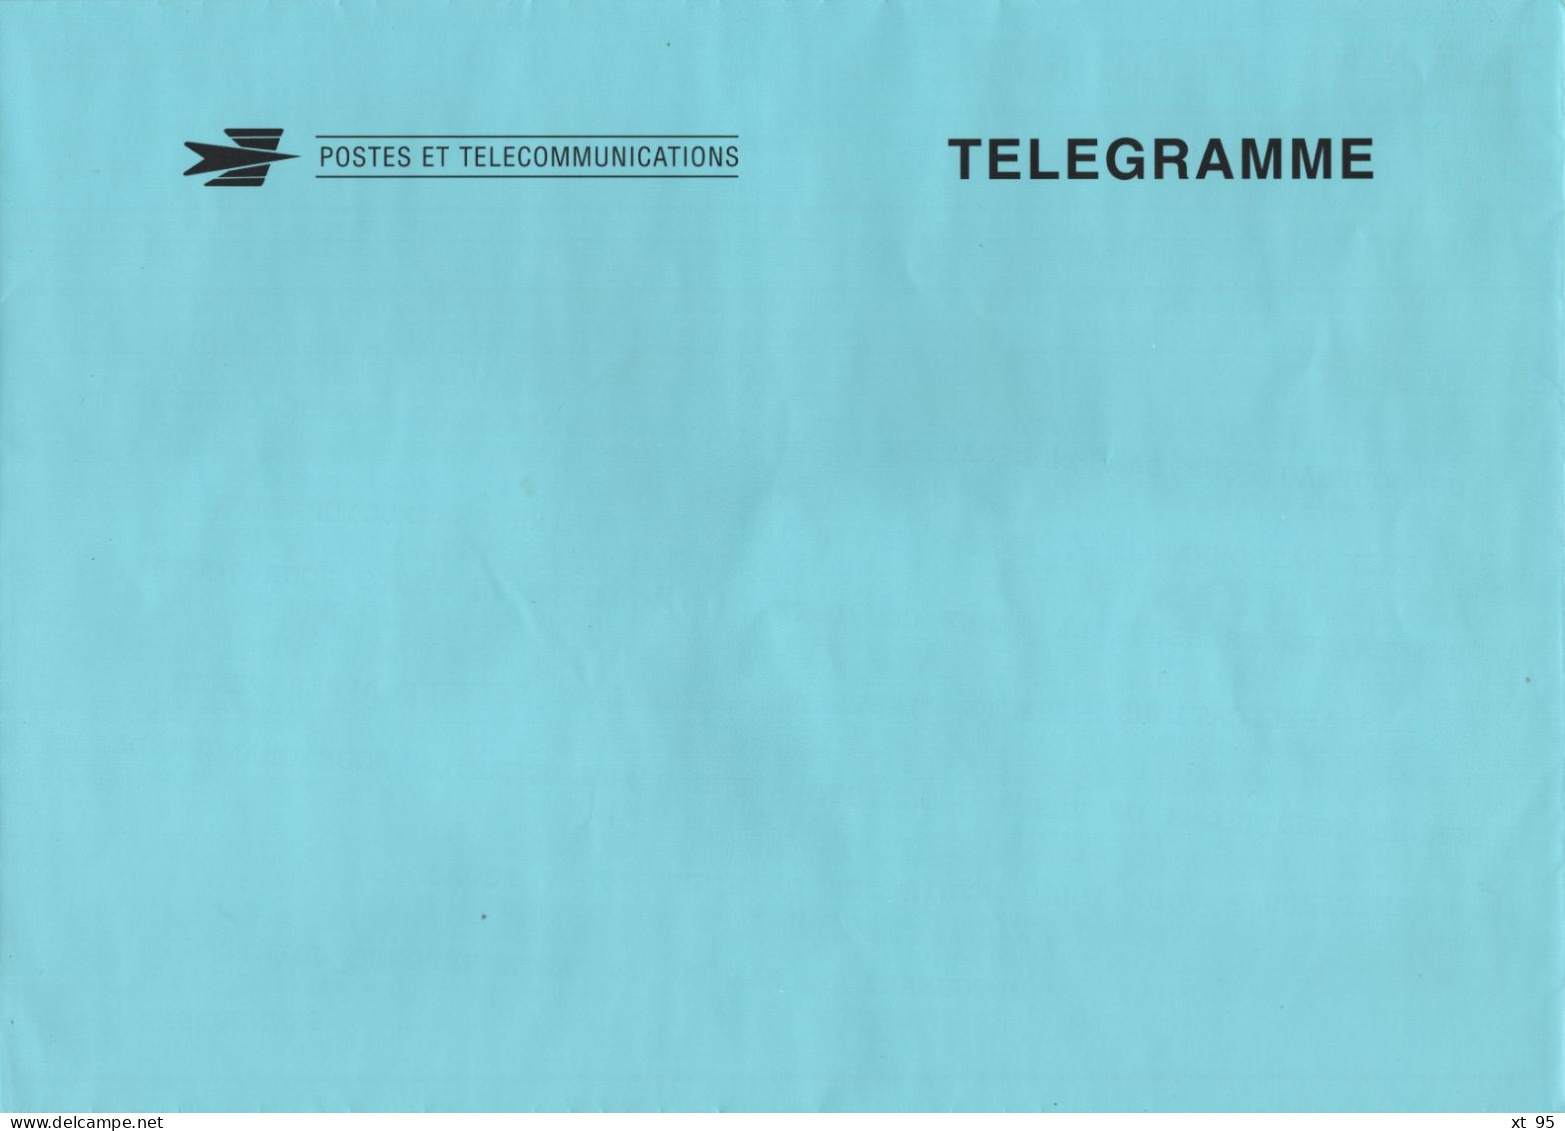 Simili Telegramme (grand Format A4) - Publicite - Sennheiser - Electricite - Telegraphie Und Telefon